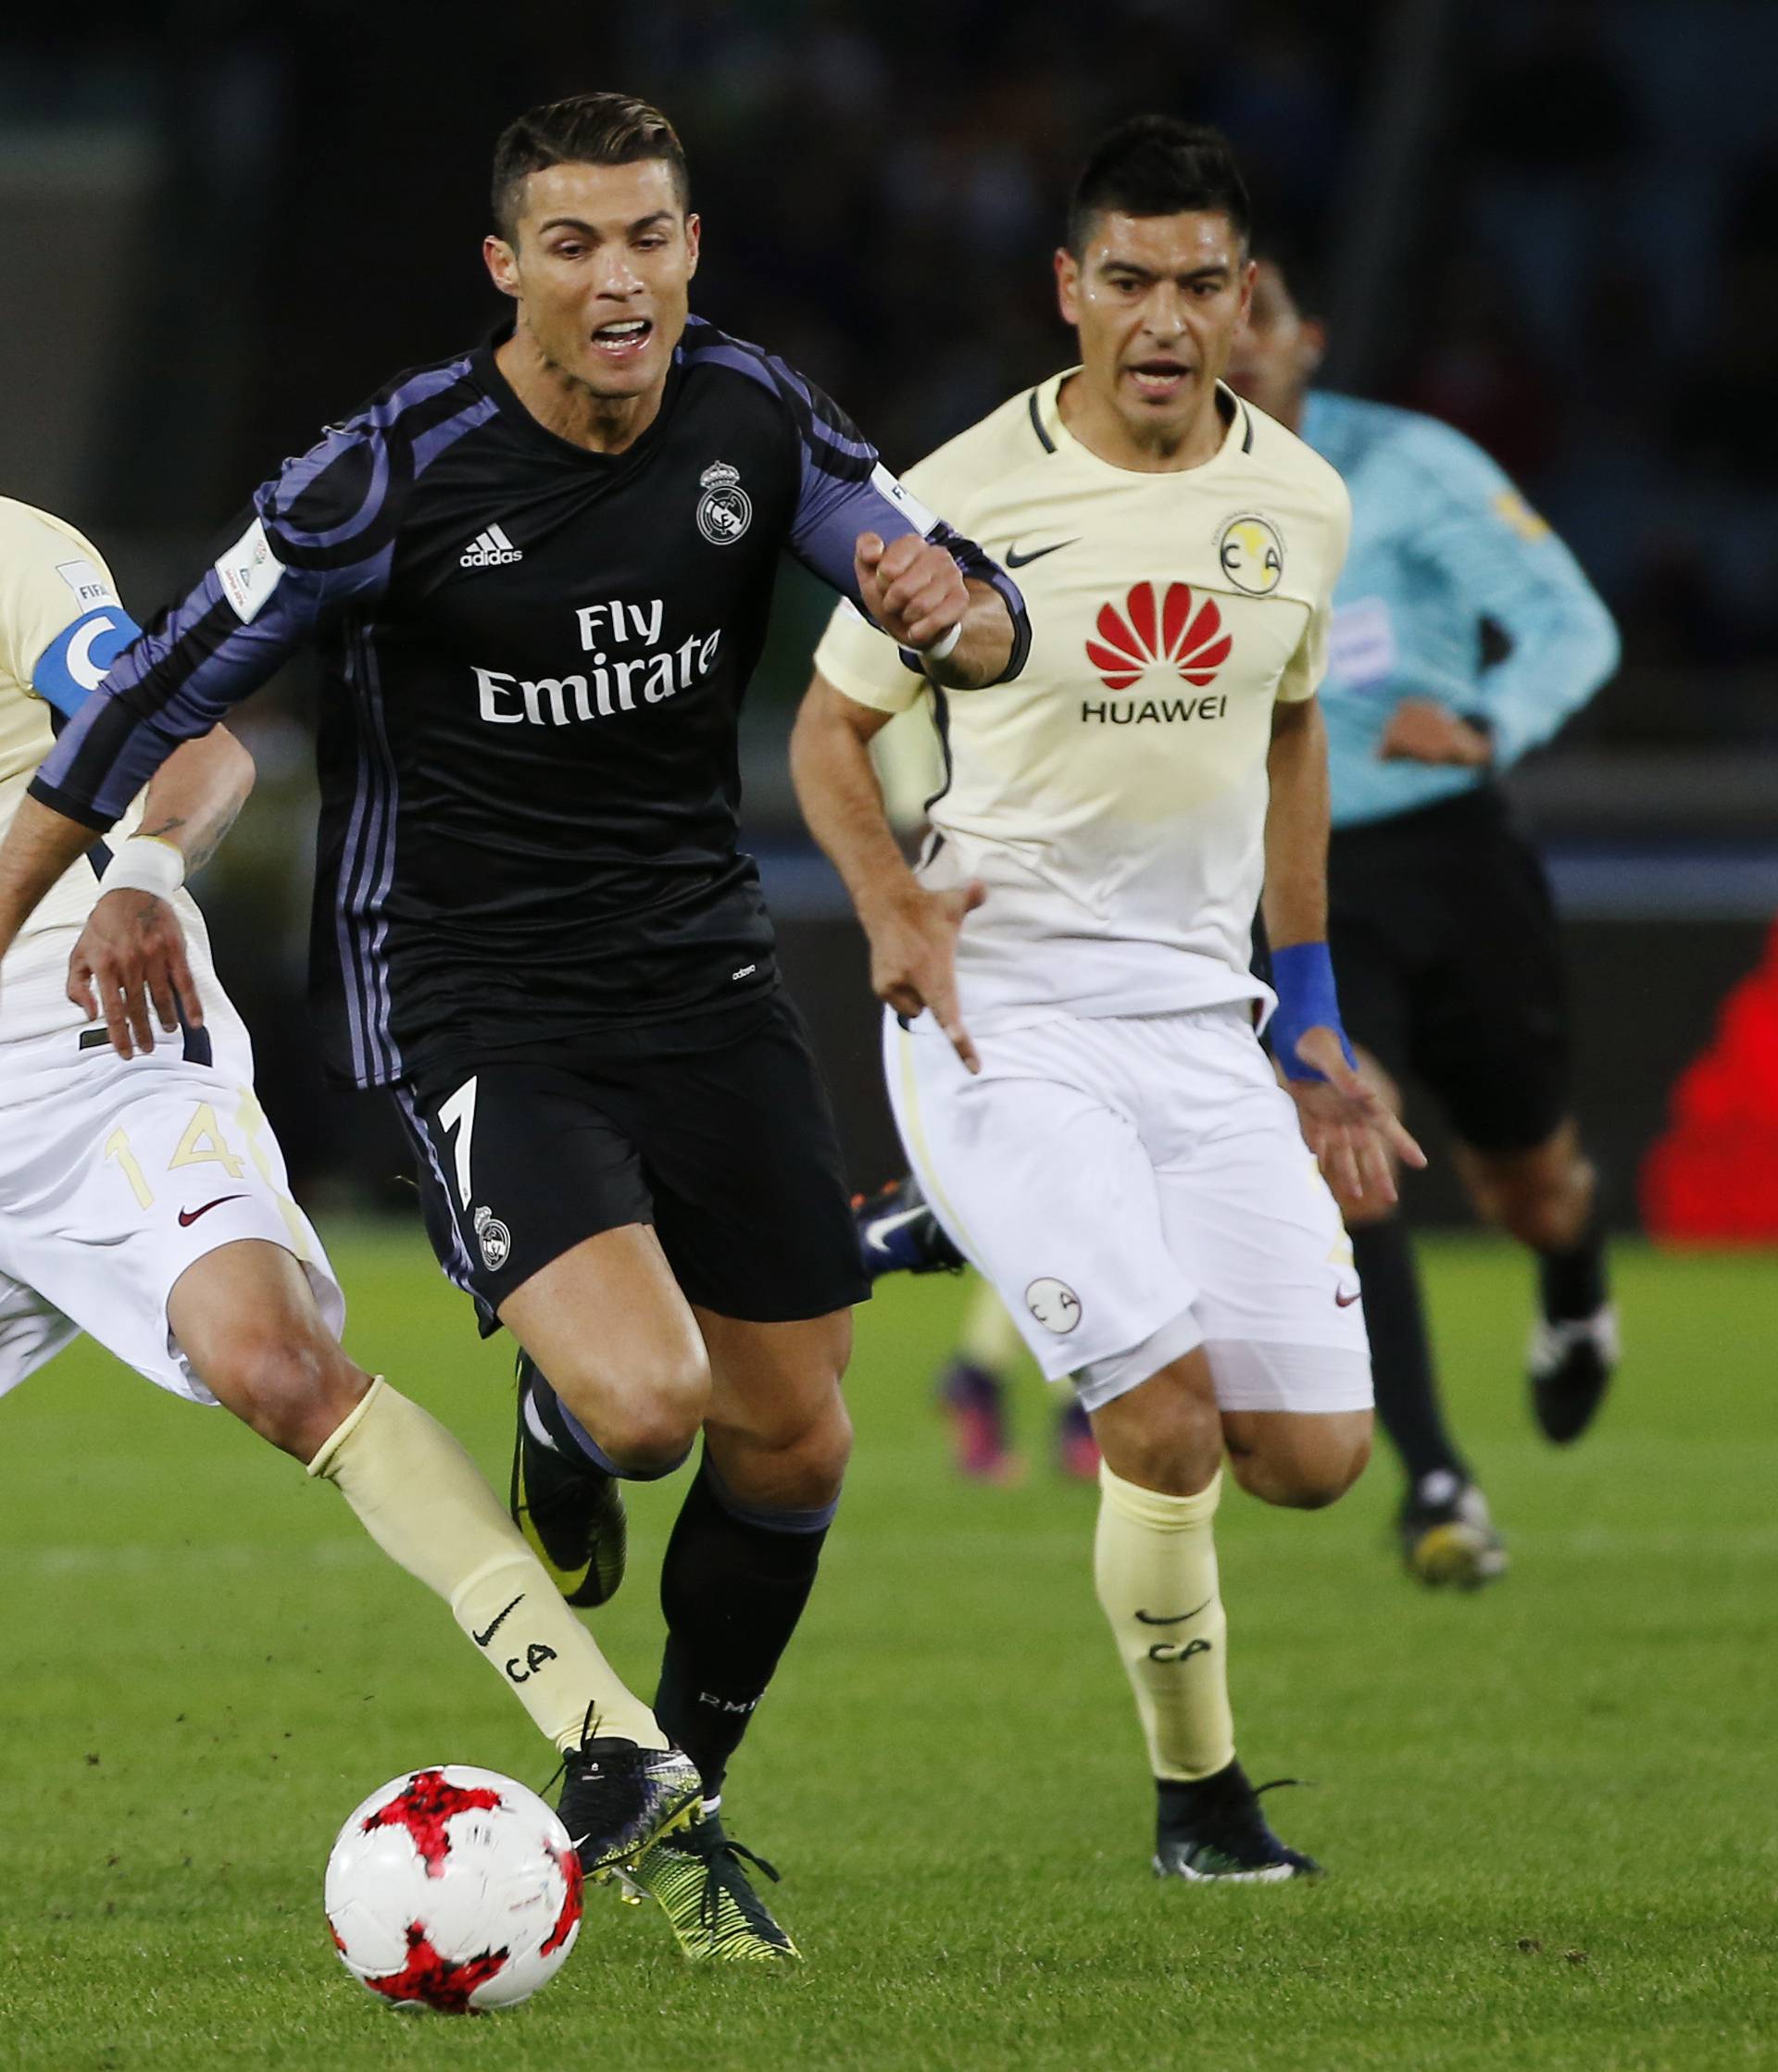 Real Madrid's Cristiano Ronaldo in action with Club America's Rubens Sambueza